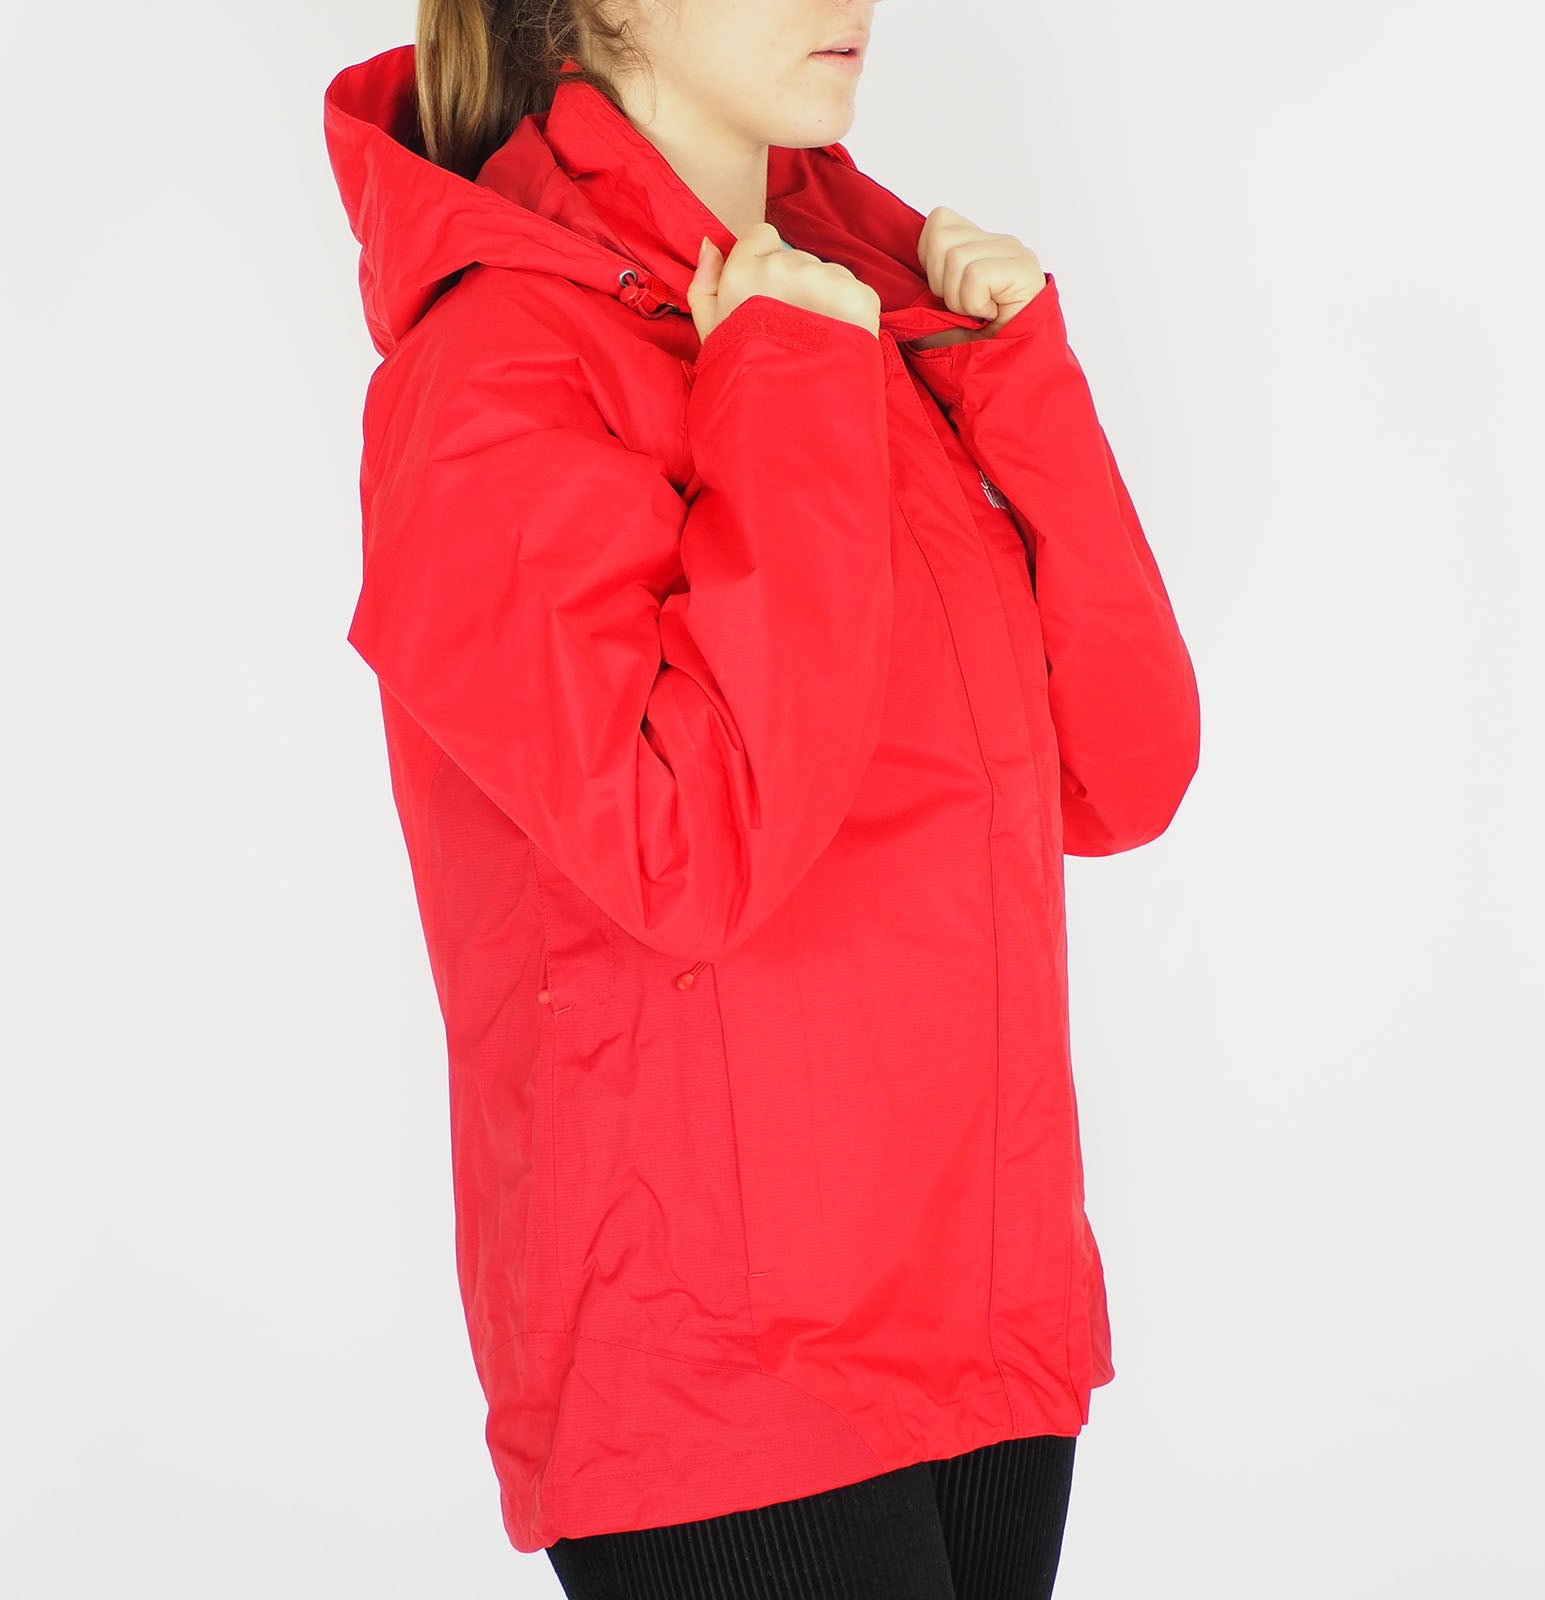 Womens Jack Wolfskin 5006521 Red Fire Zip Up Warm Windproof Ladies Hiking Jacket